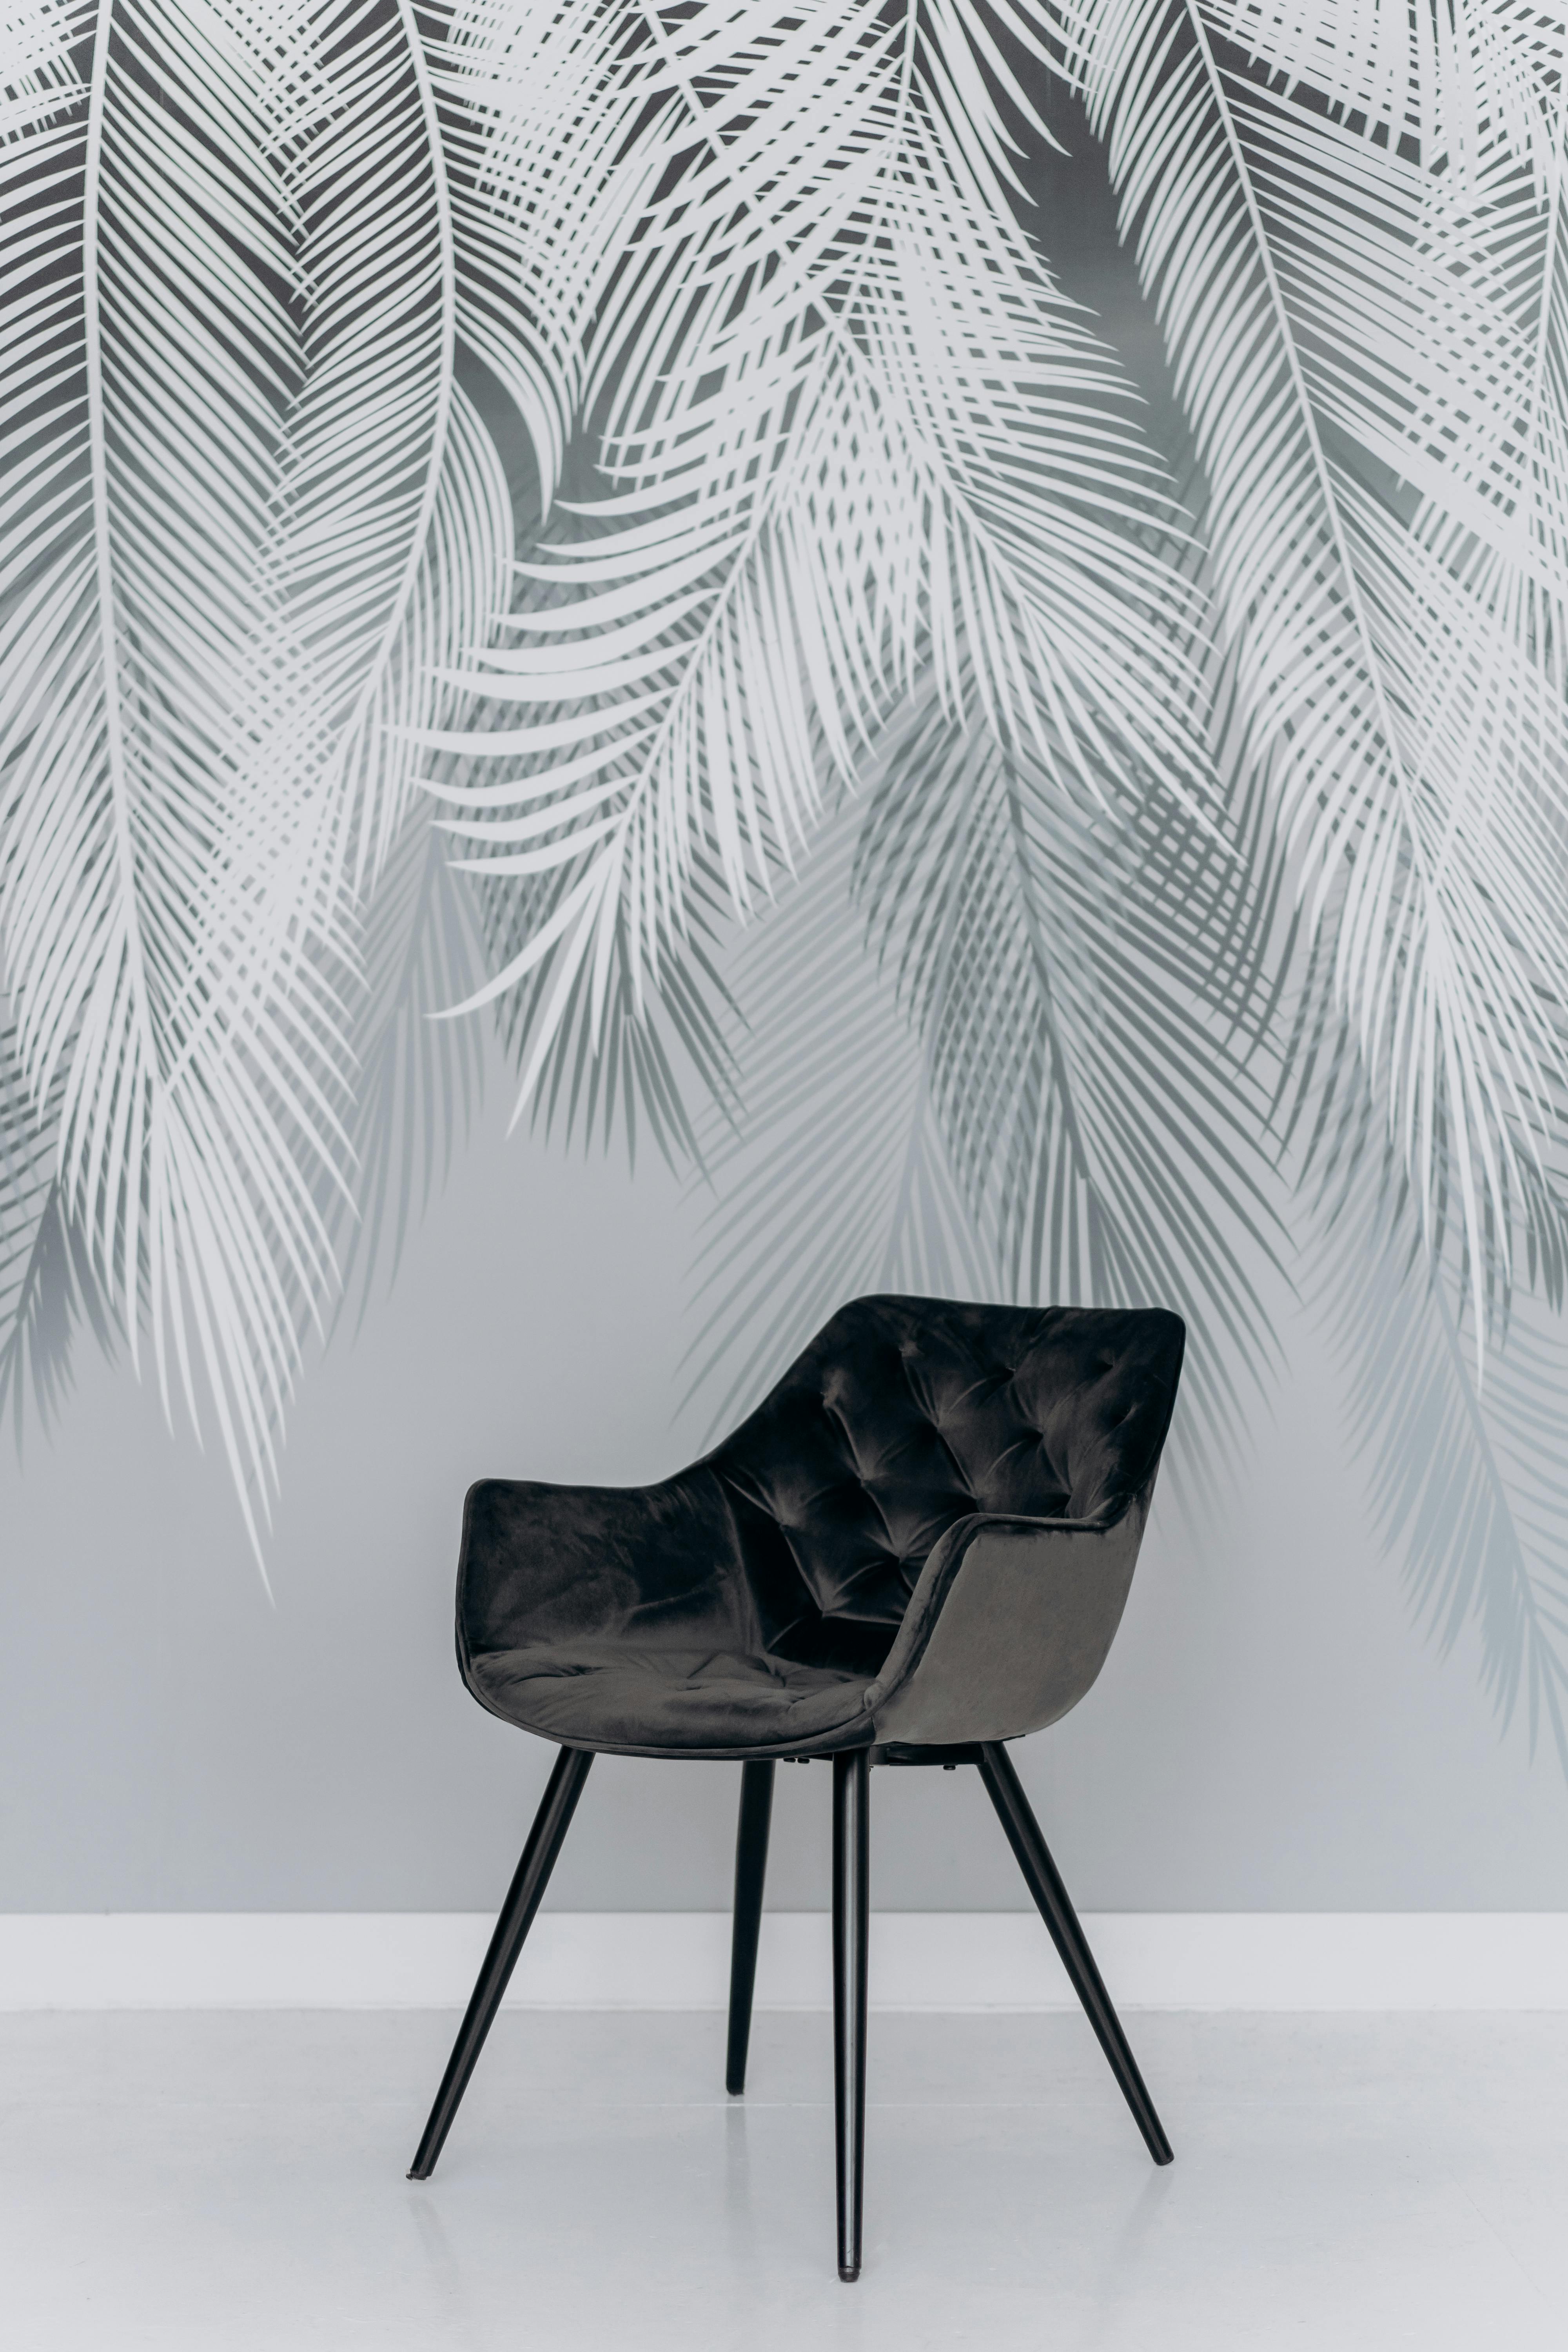 black chair beside green palm plant